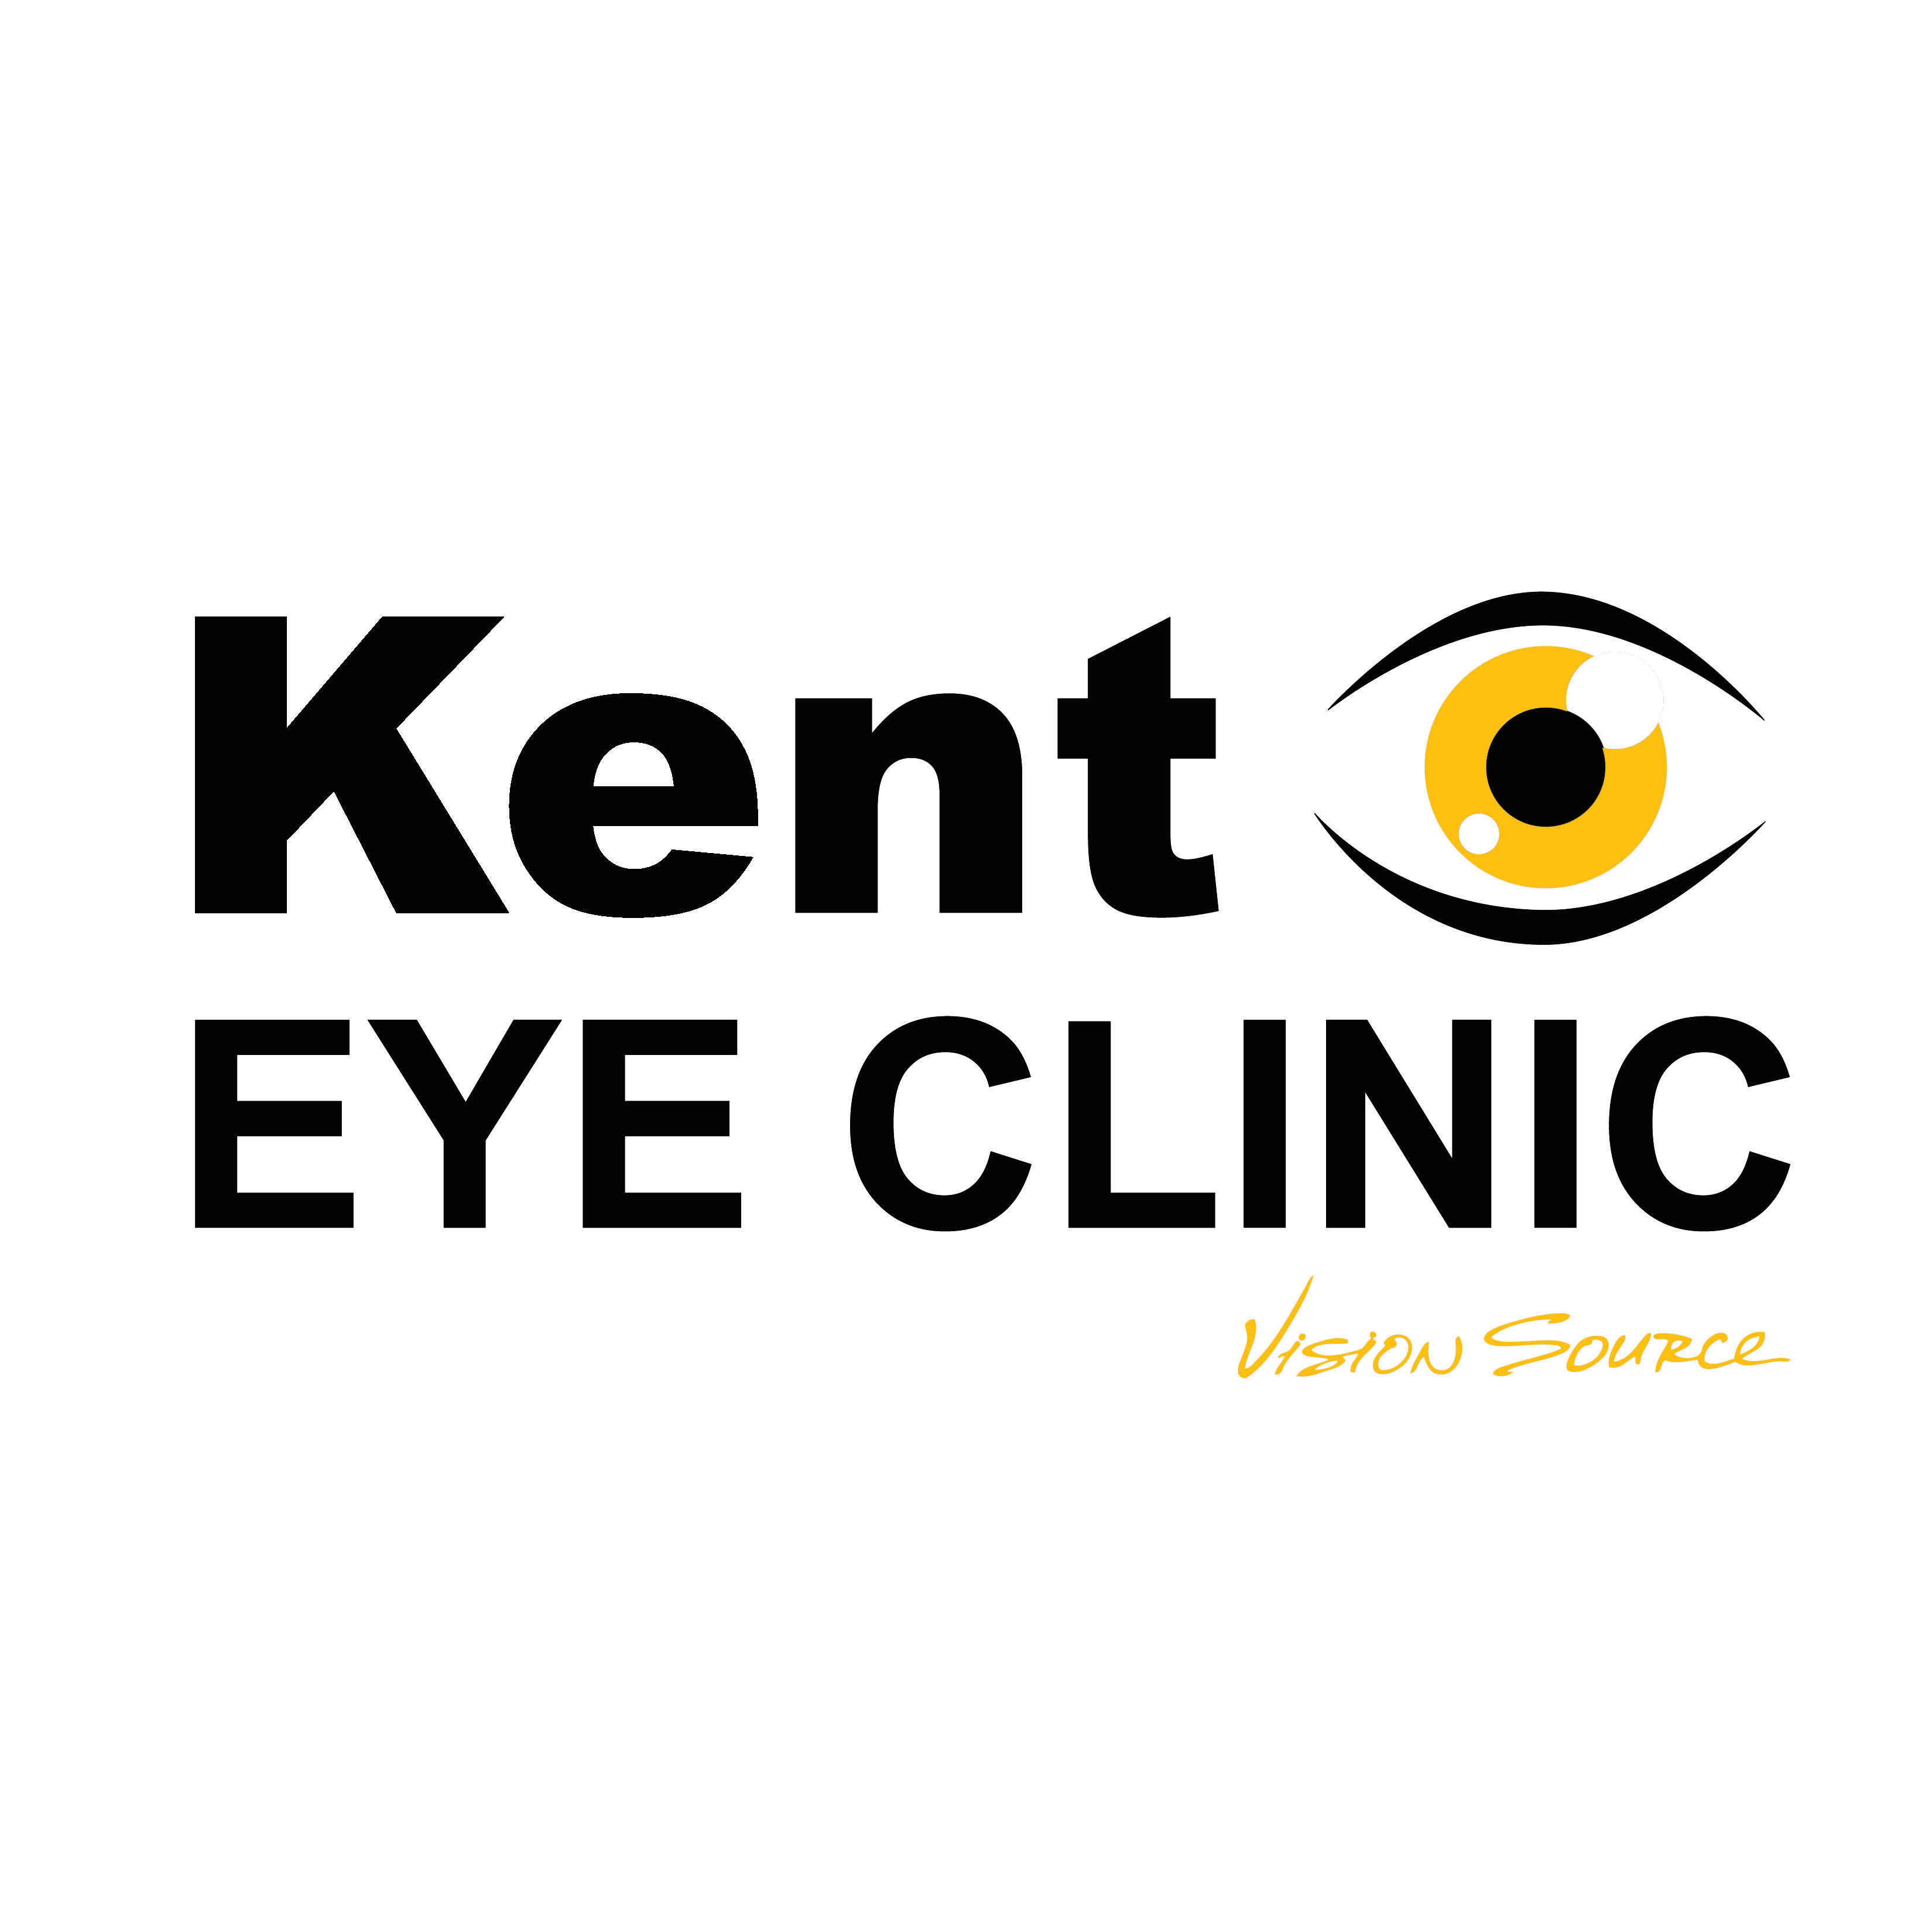 Kent Eye Clinic Coupons near me in Kent, WA 98031 | 8coupons